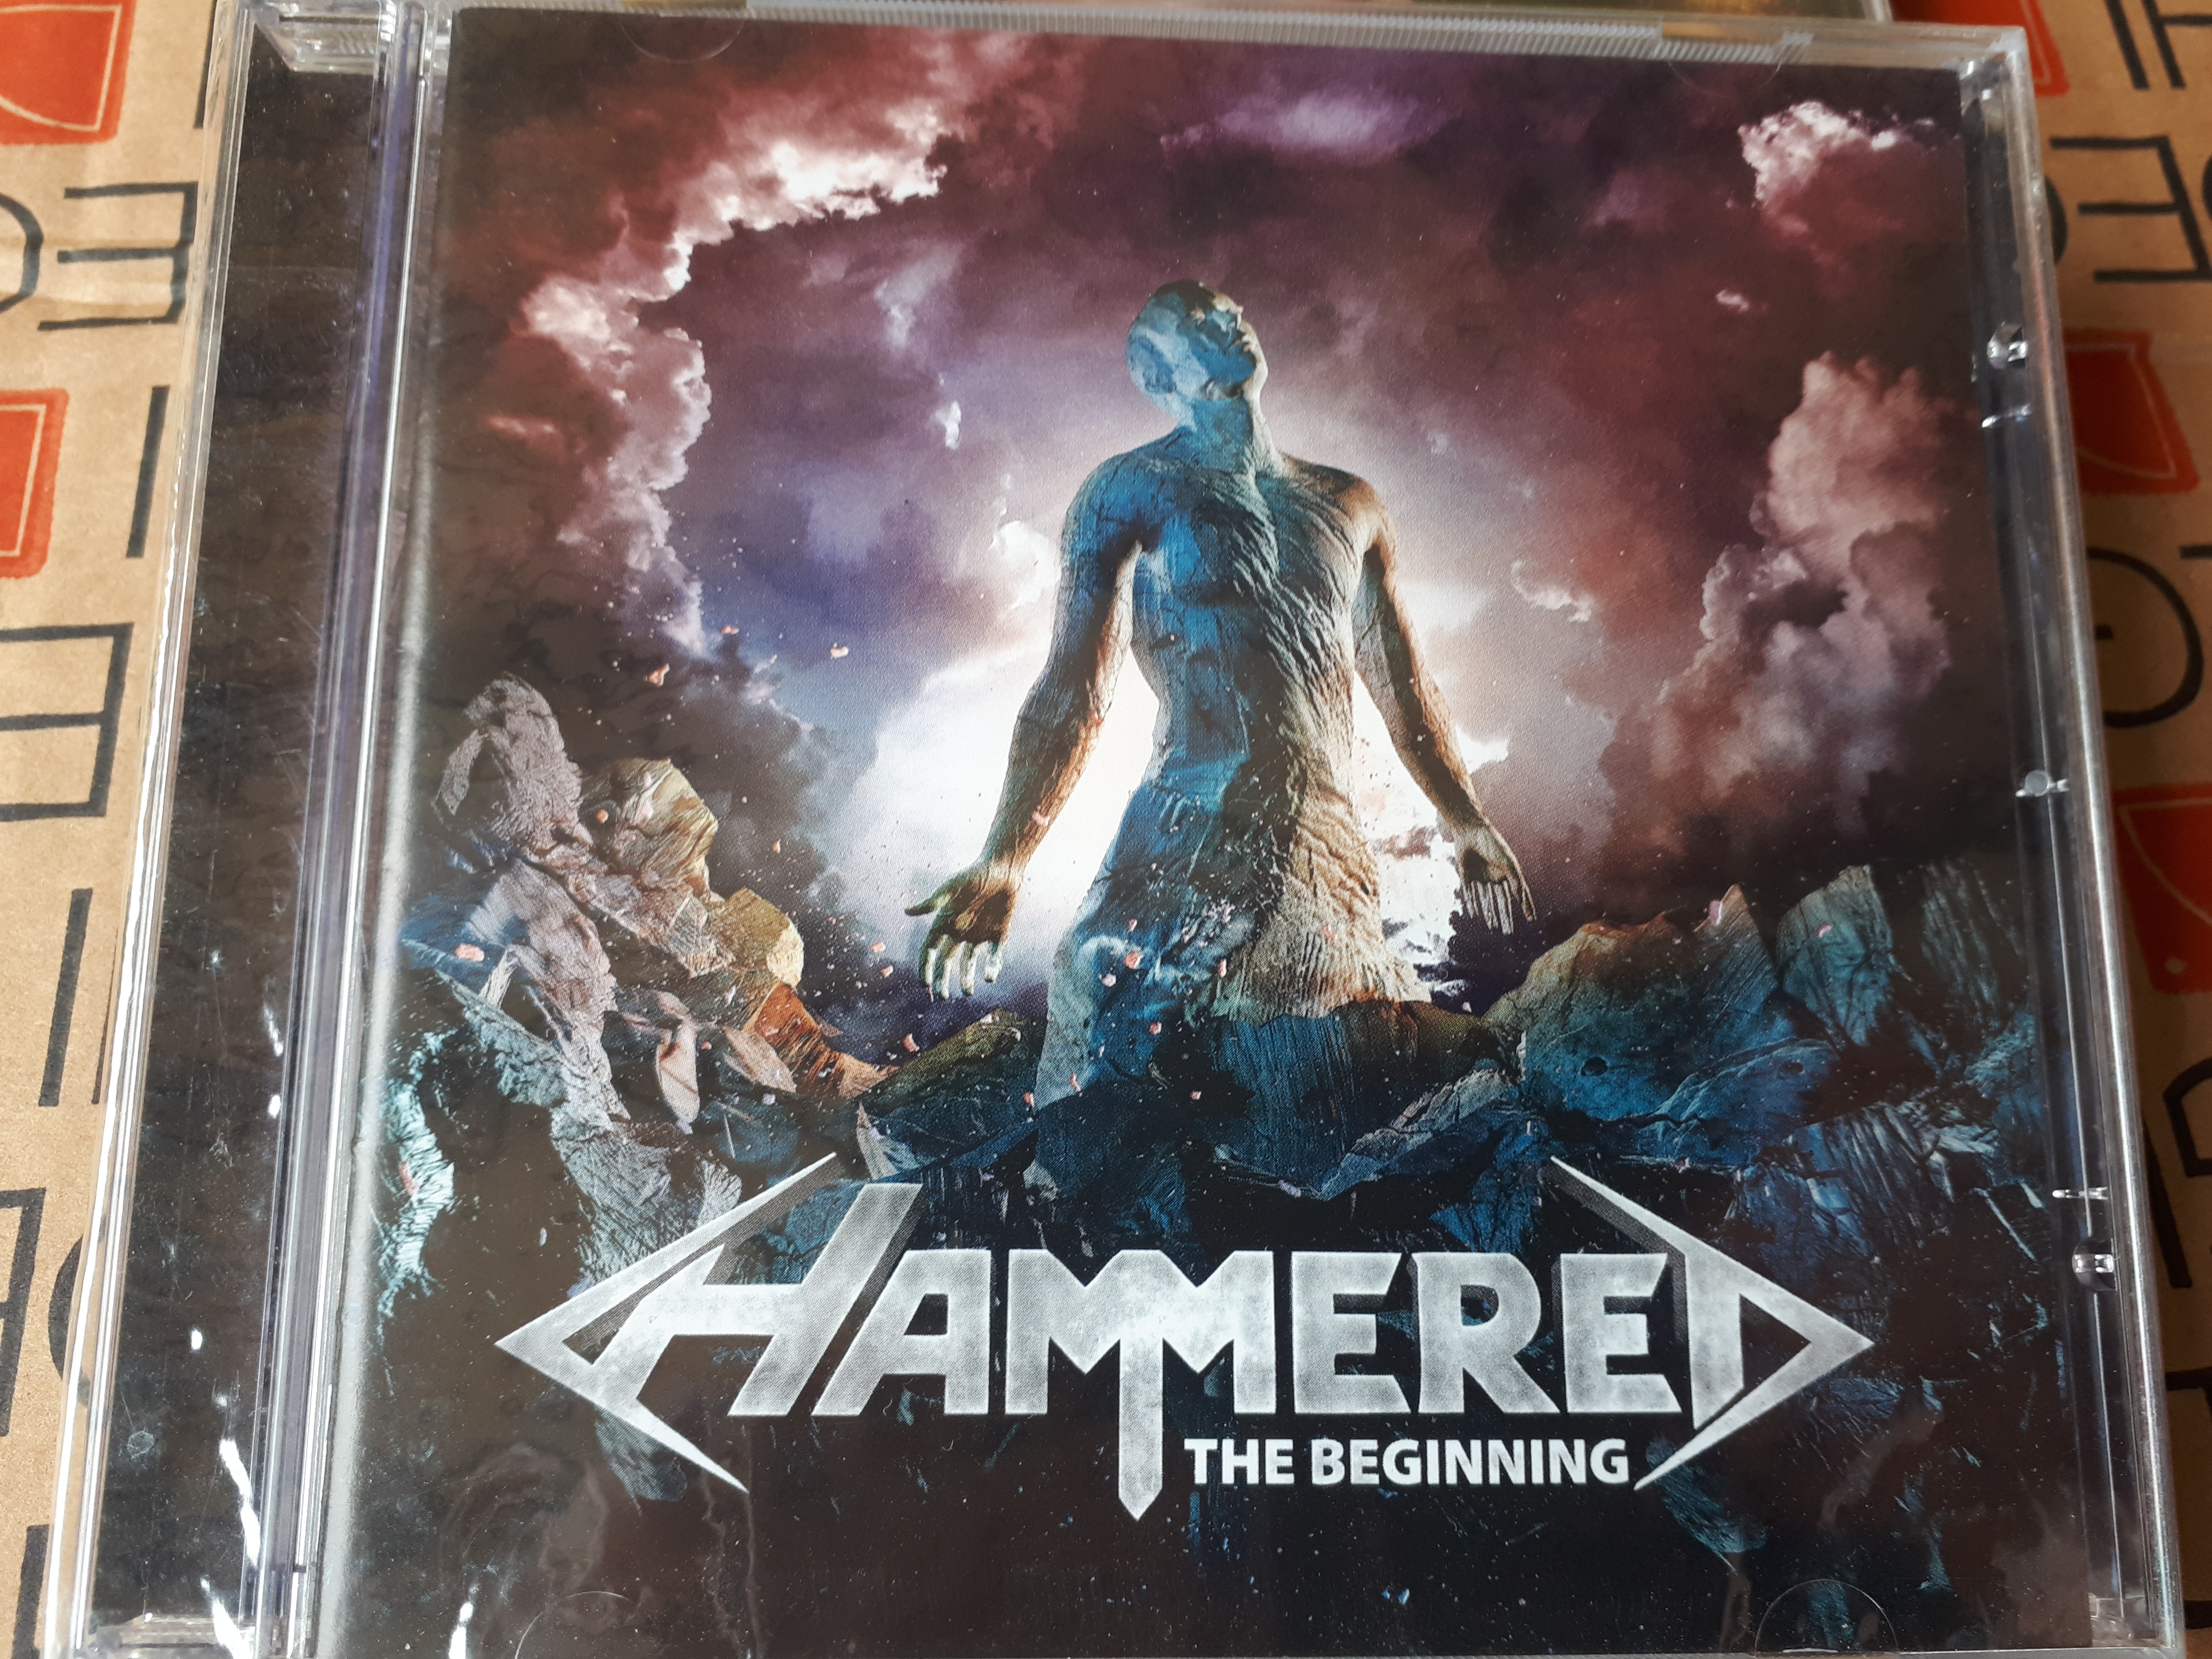 Hammered - The Beginning